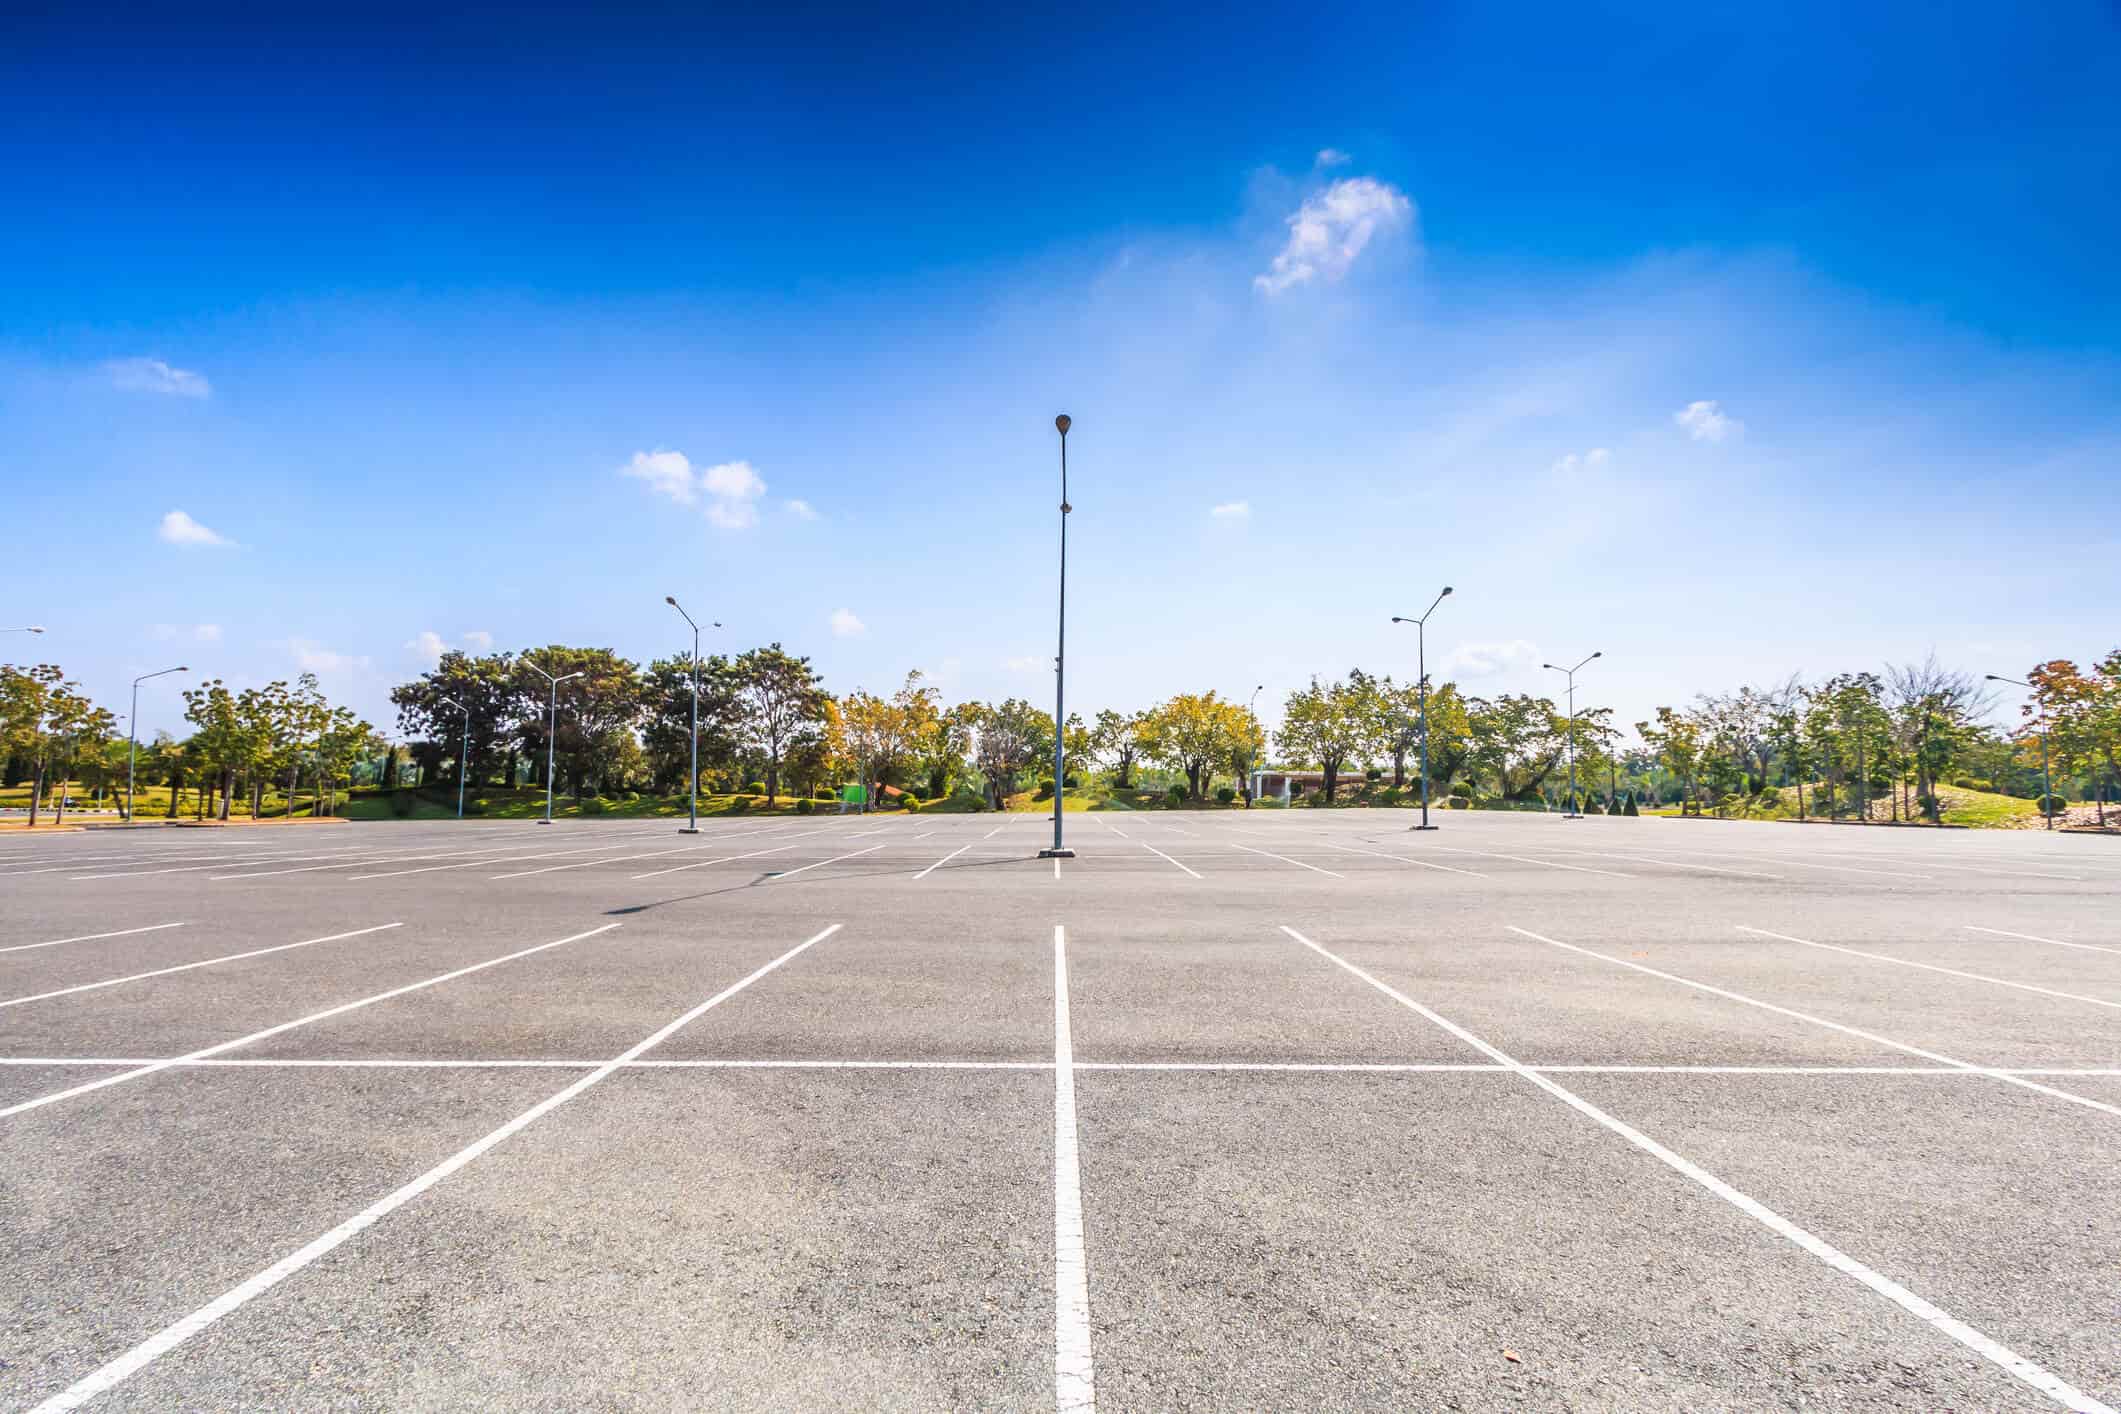 empty commercial concrete parking lots, aerial view